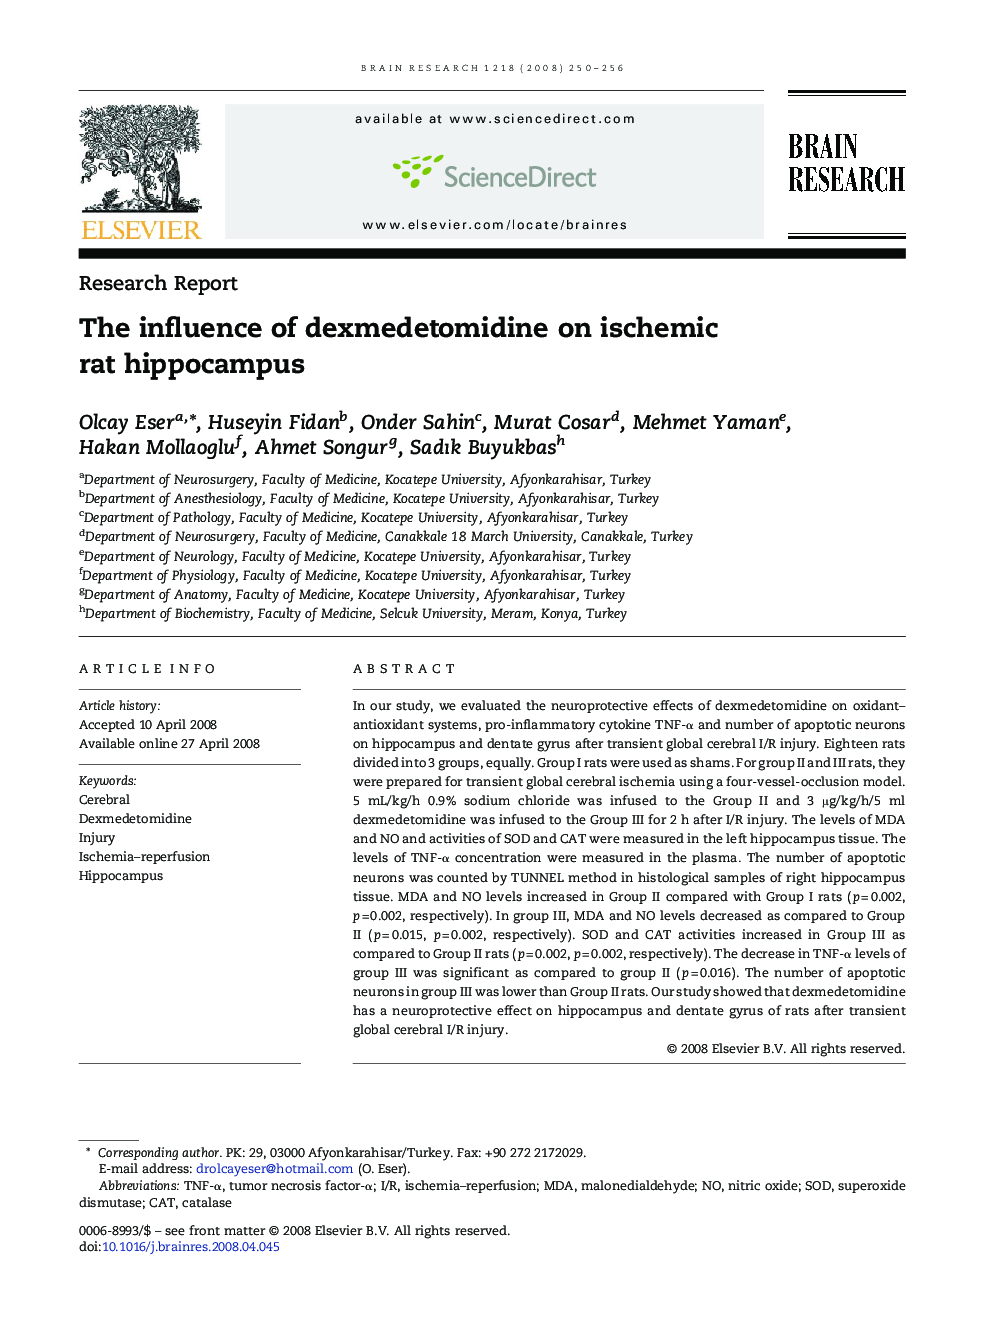 The influence of dexmedetomidine on ischemic rat hippocampus